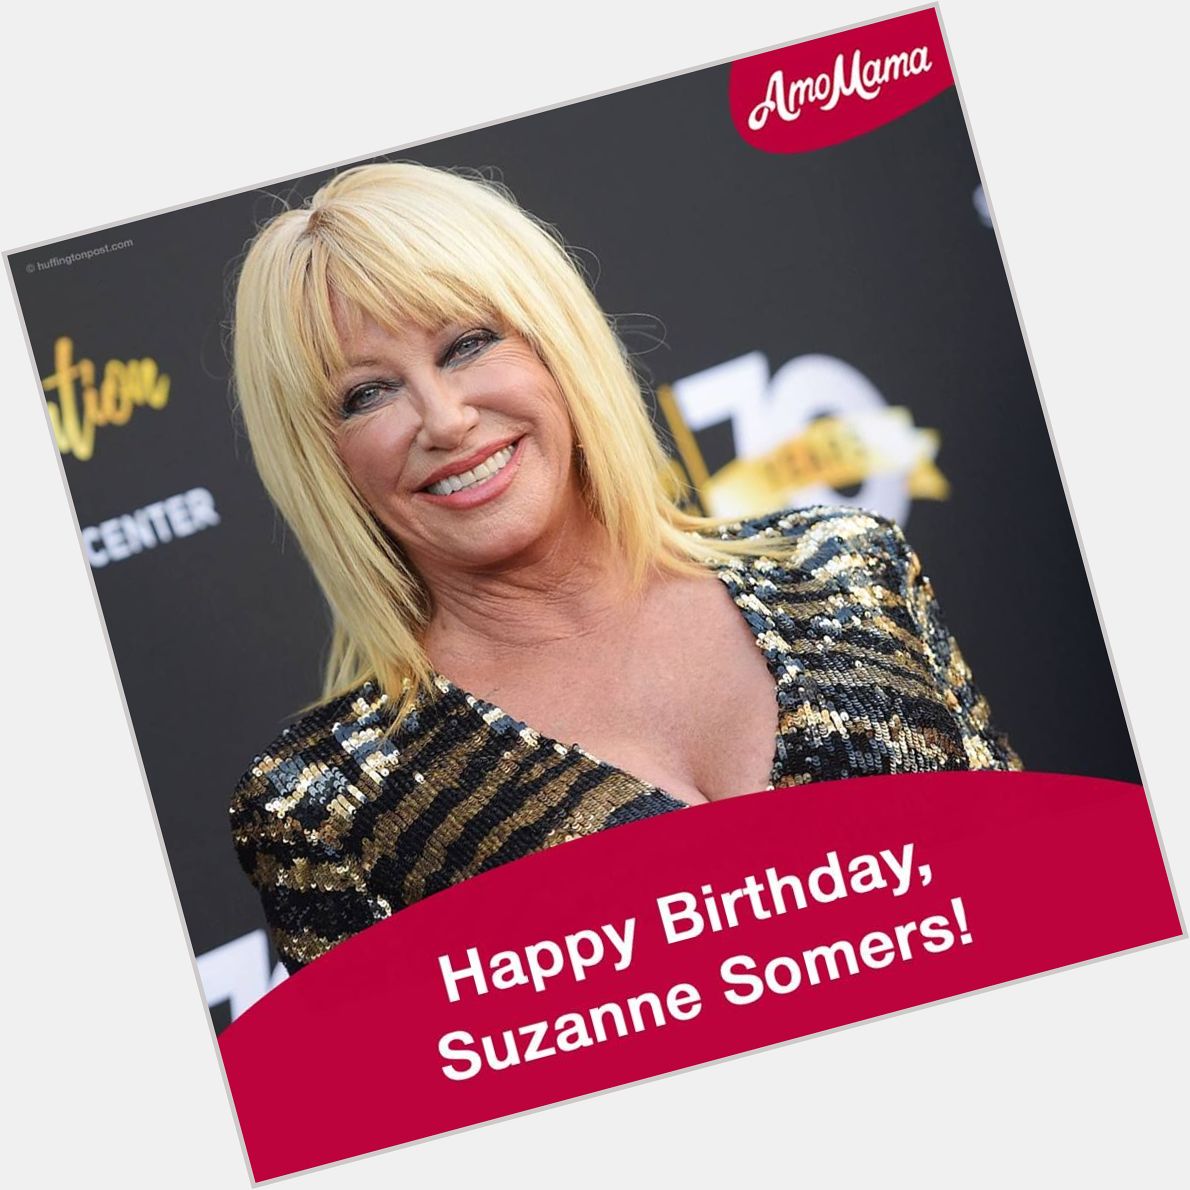   Suzanne Somers, Happy Birthday! 